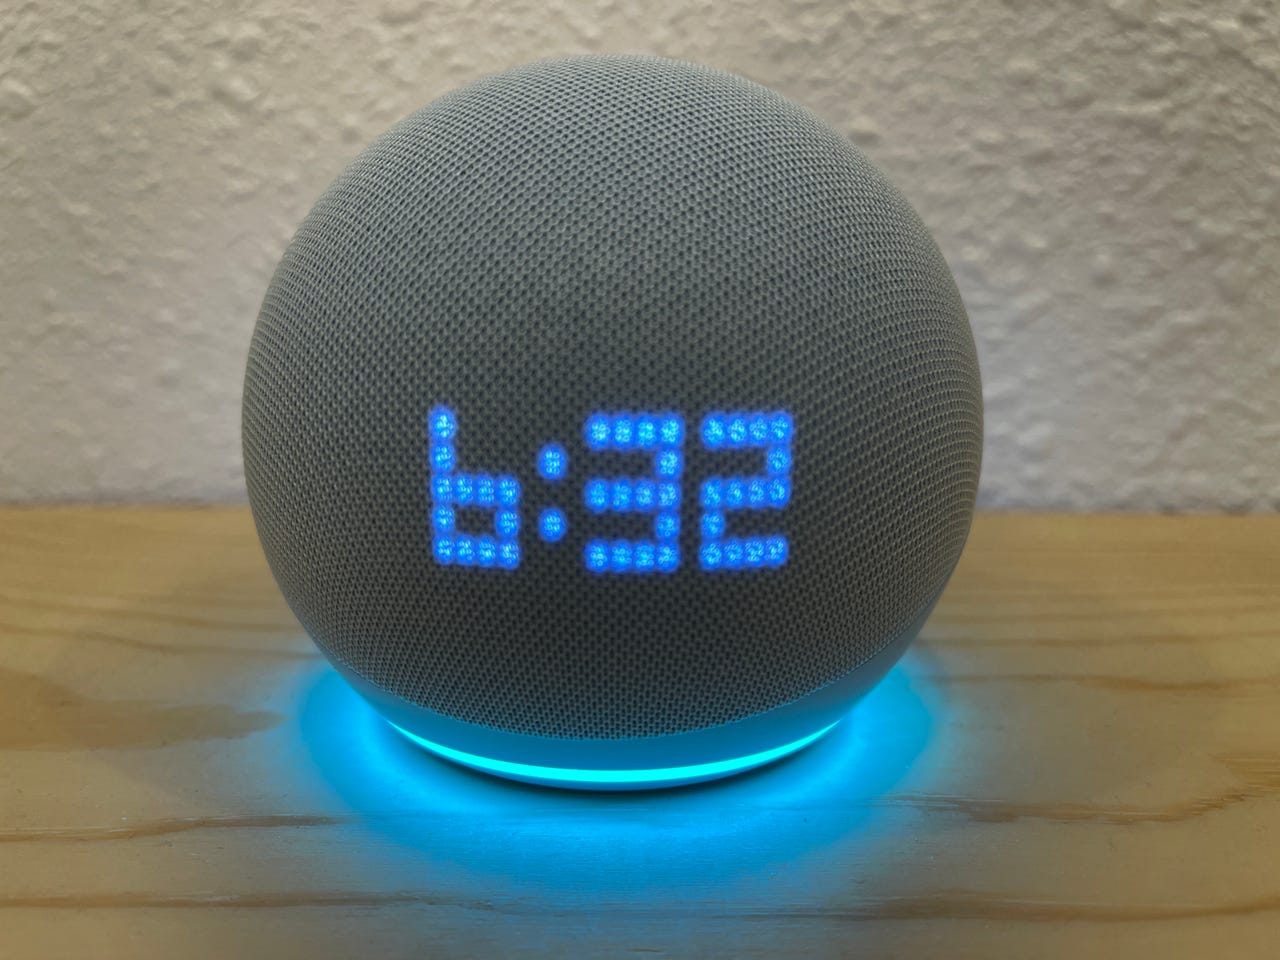 Echo Dot 5th Gen smart speaker review: Small yet mighty